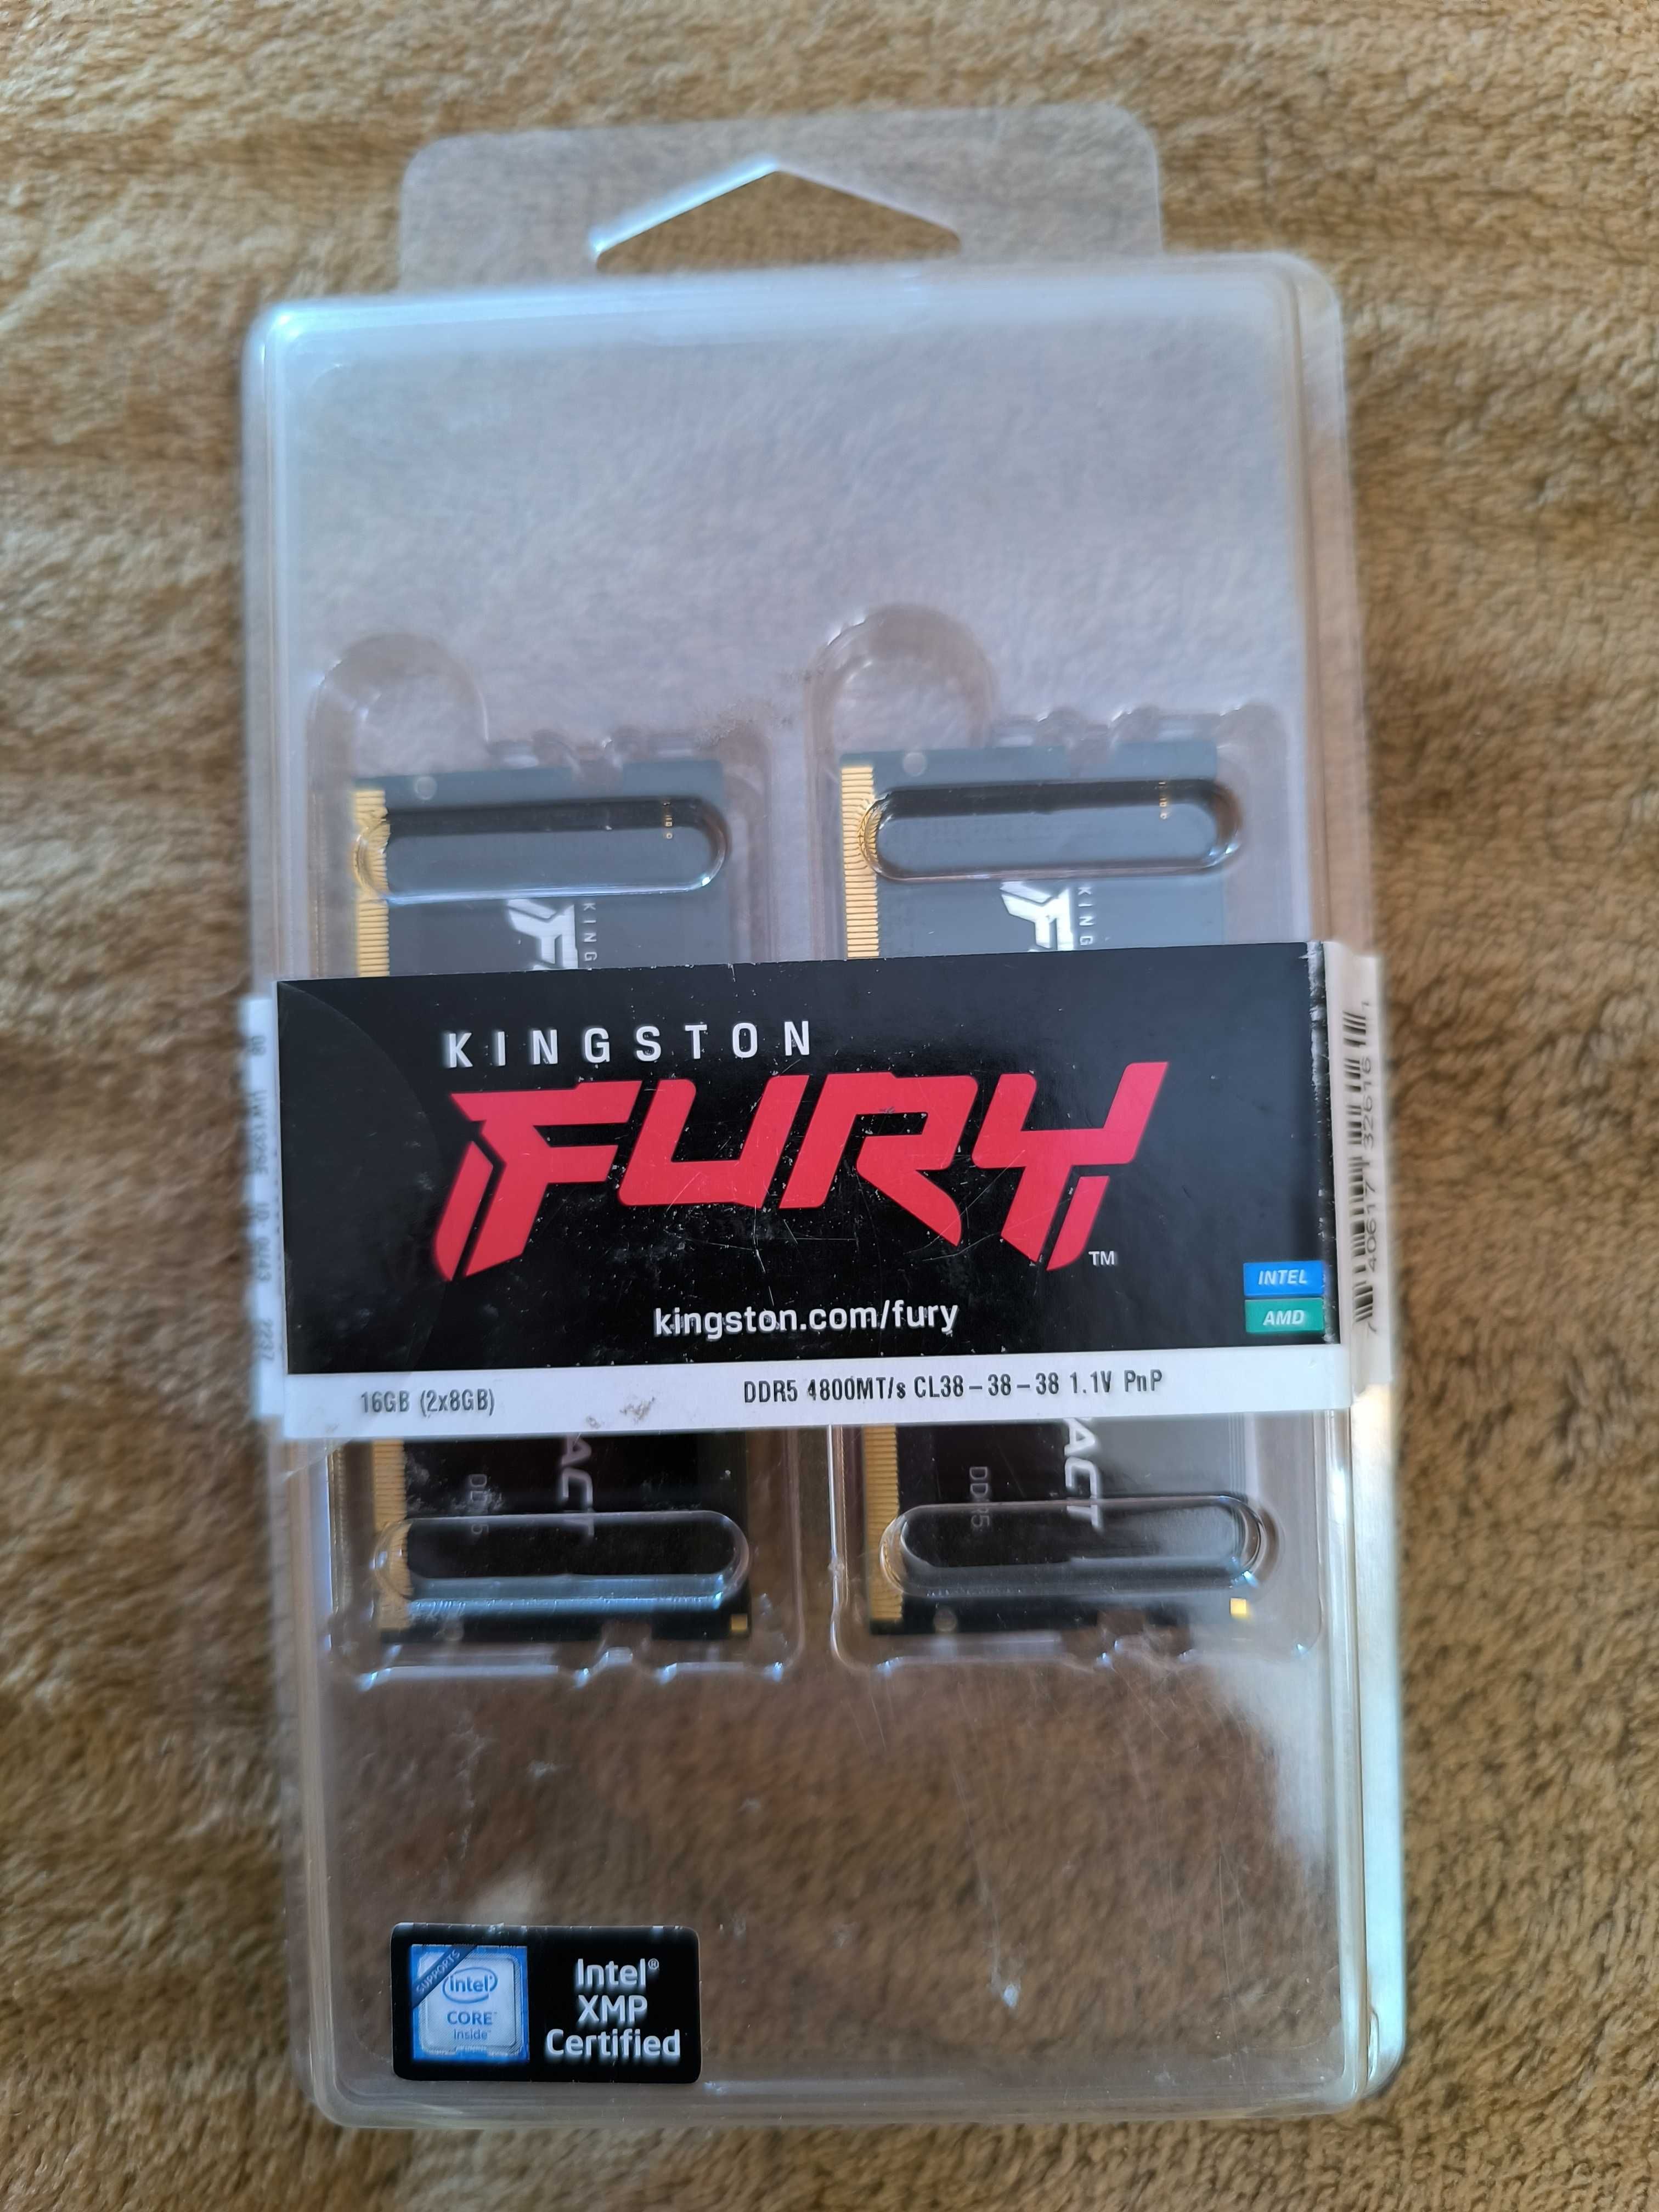 Pamięć RAM KINGSTON Fury Impact 16GB 4800MHz